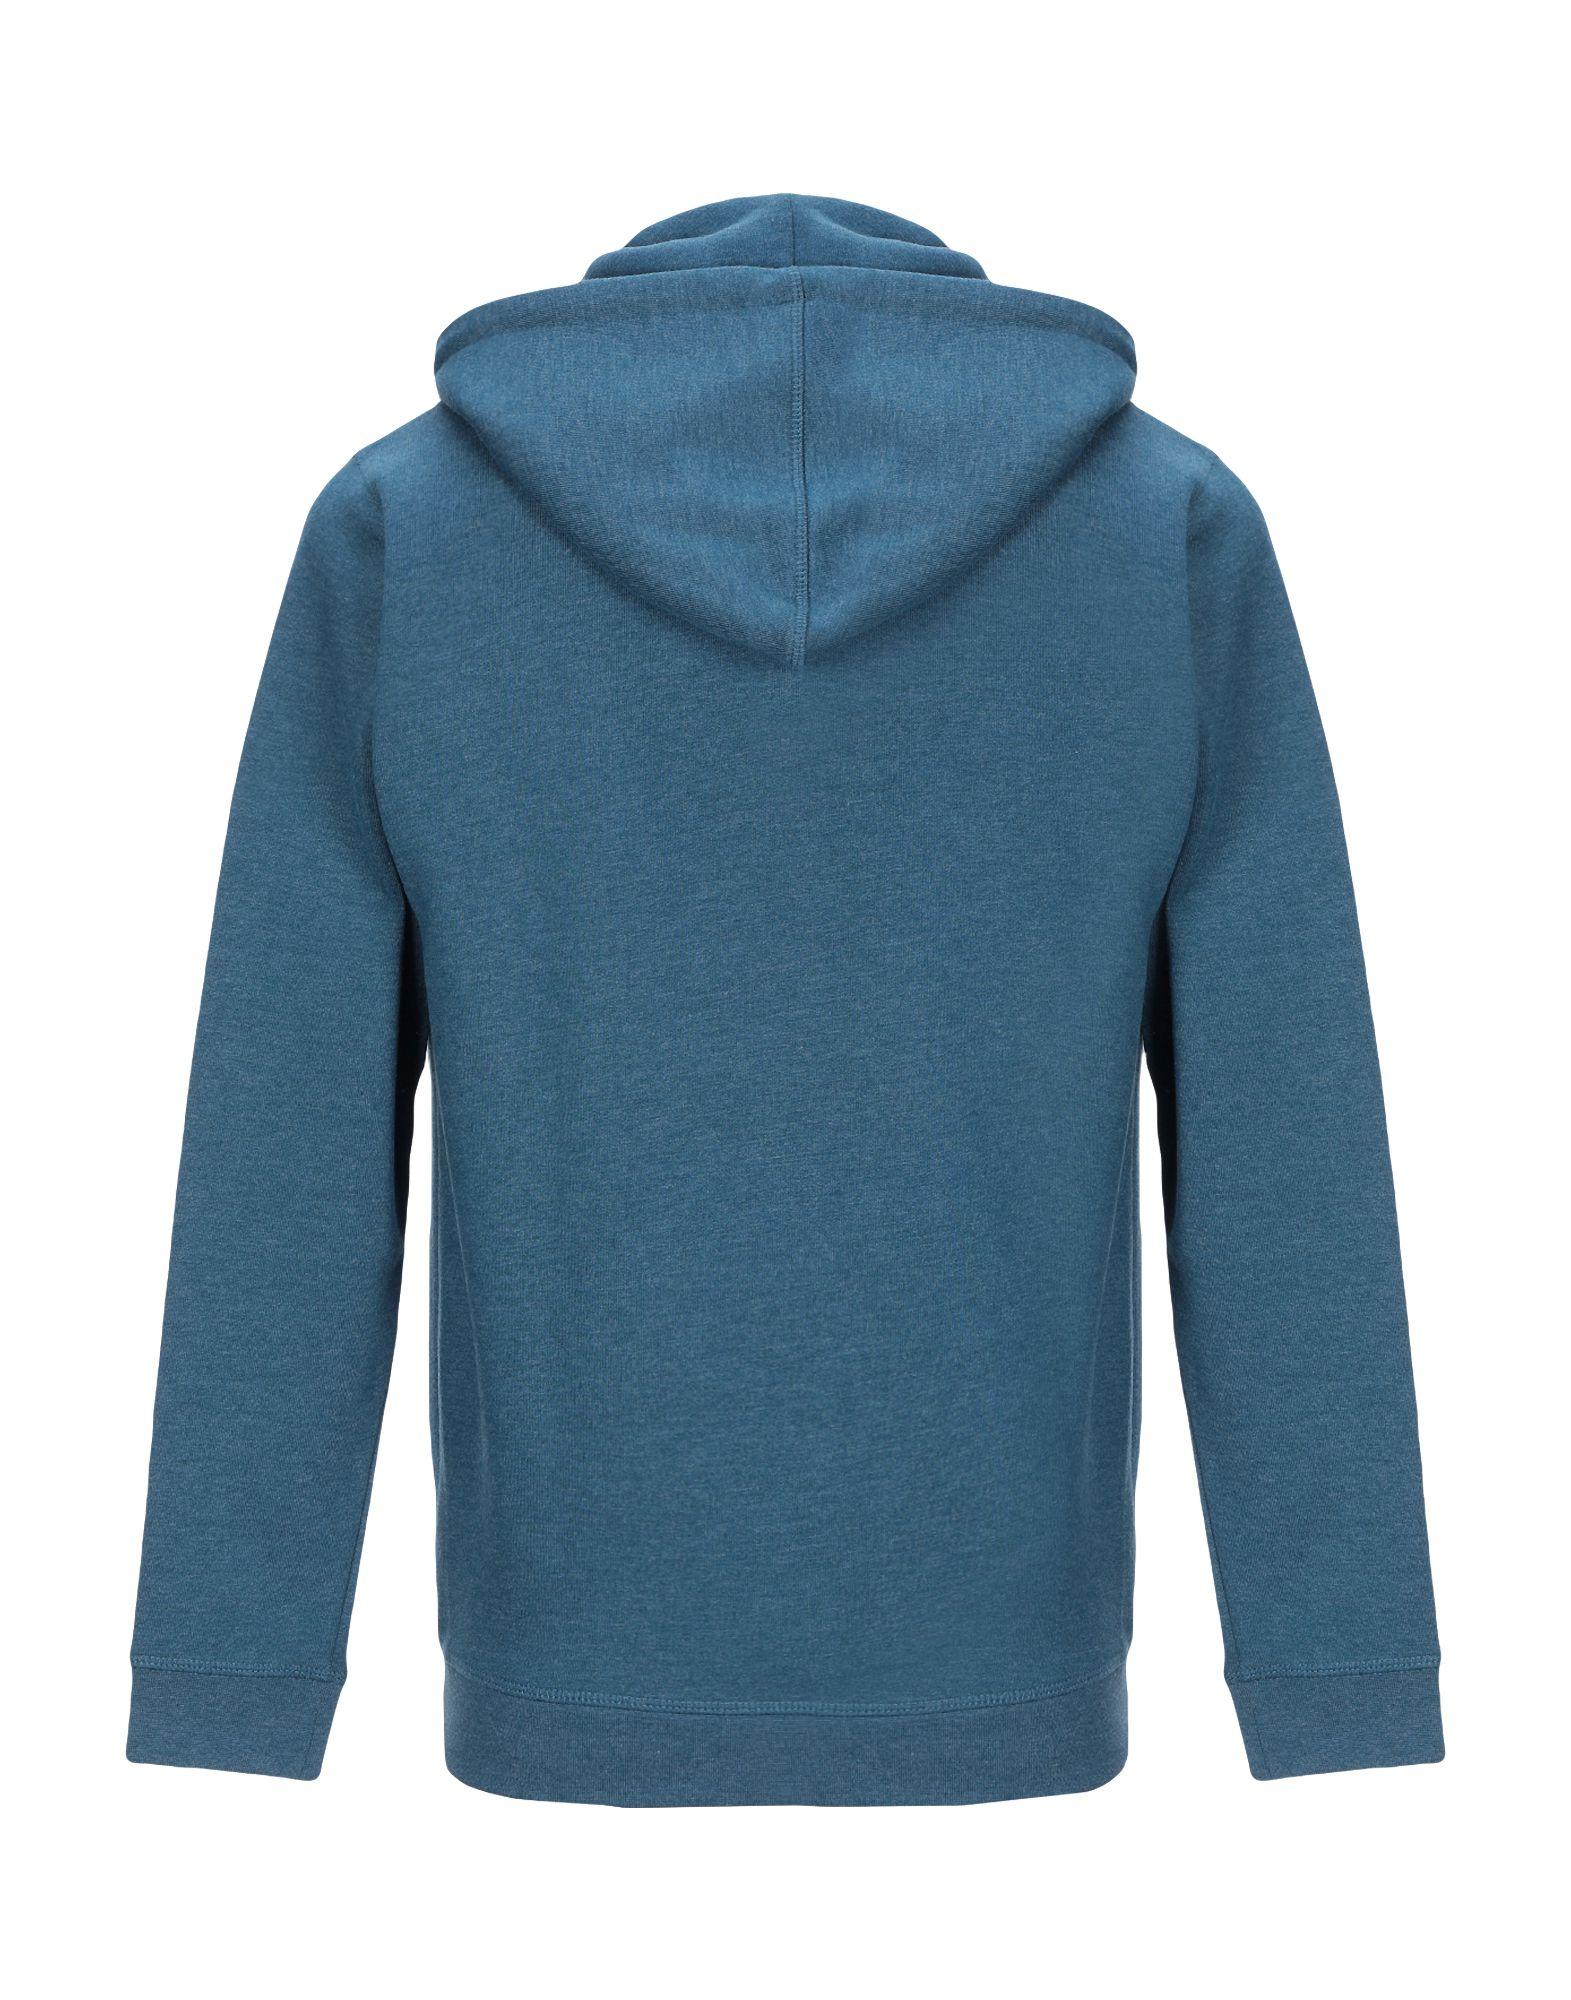 SELECTED Cotton Sweatshirt in Slate Blue (Blue) for Men - Lyst